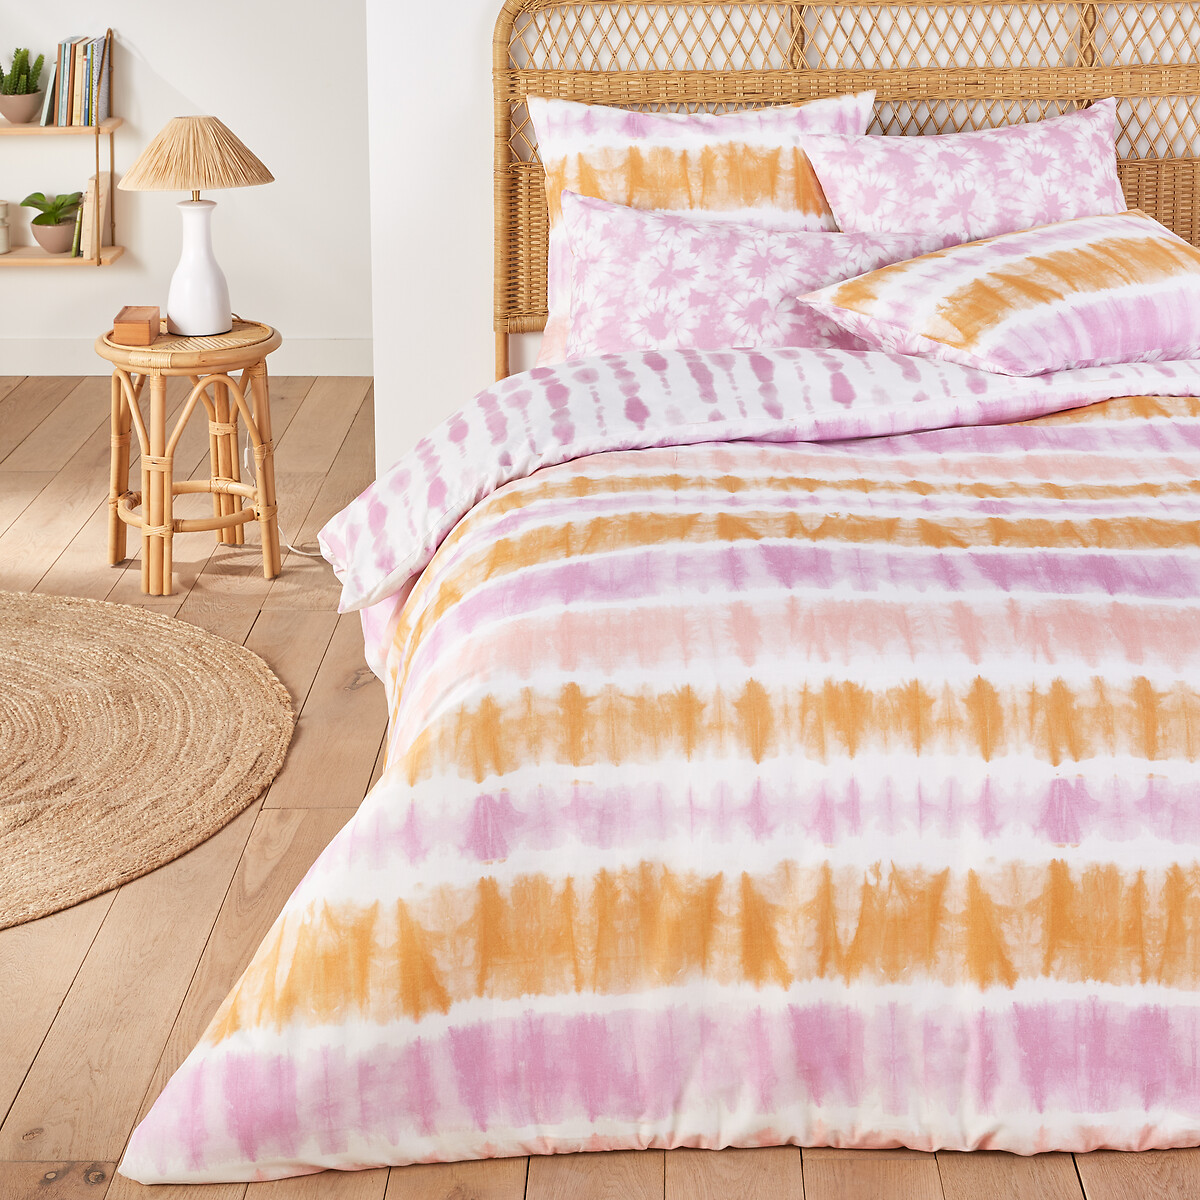 Details about   Bedspread New Shibori Print Tie & Dye 100%Cotton Hippie Bedding Kantha Bed Cover 